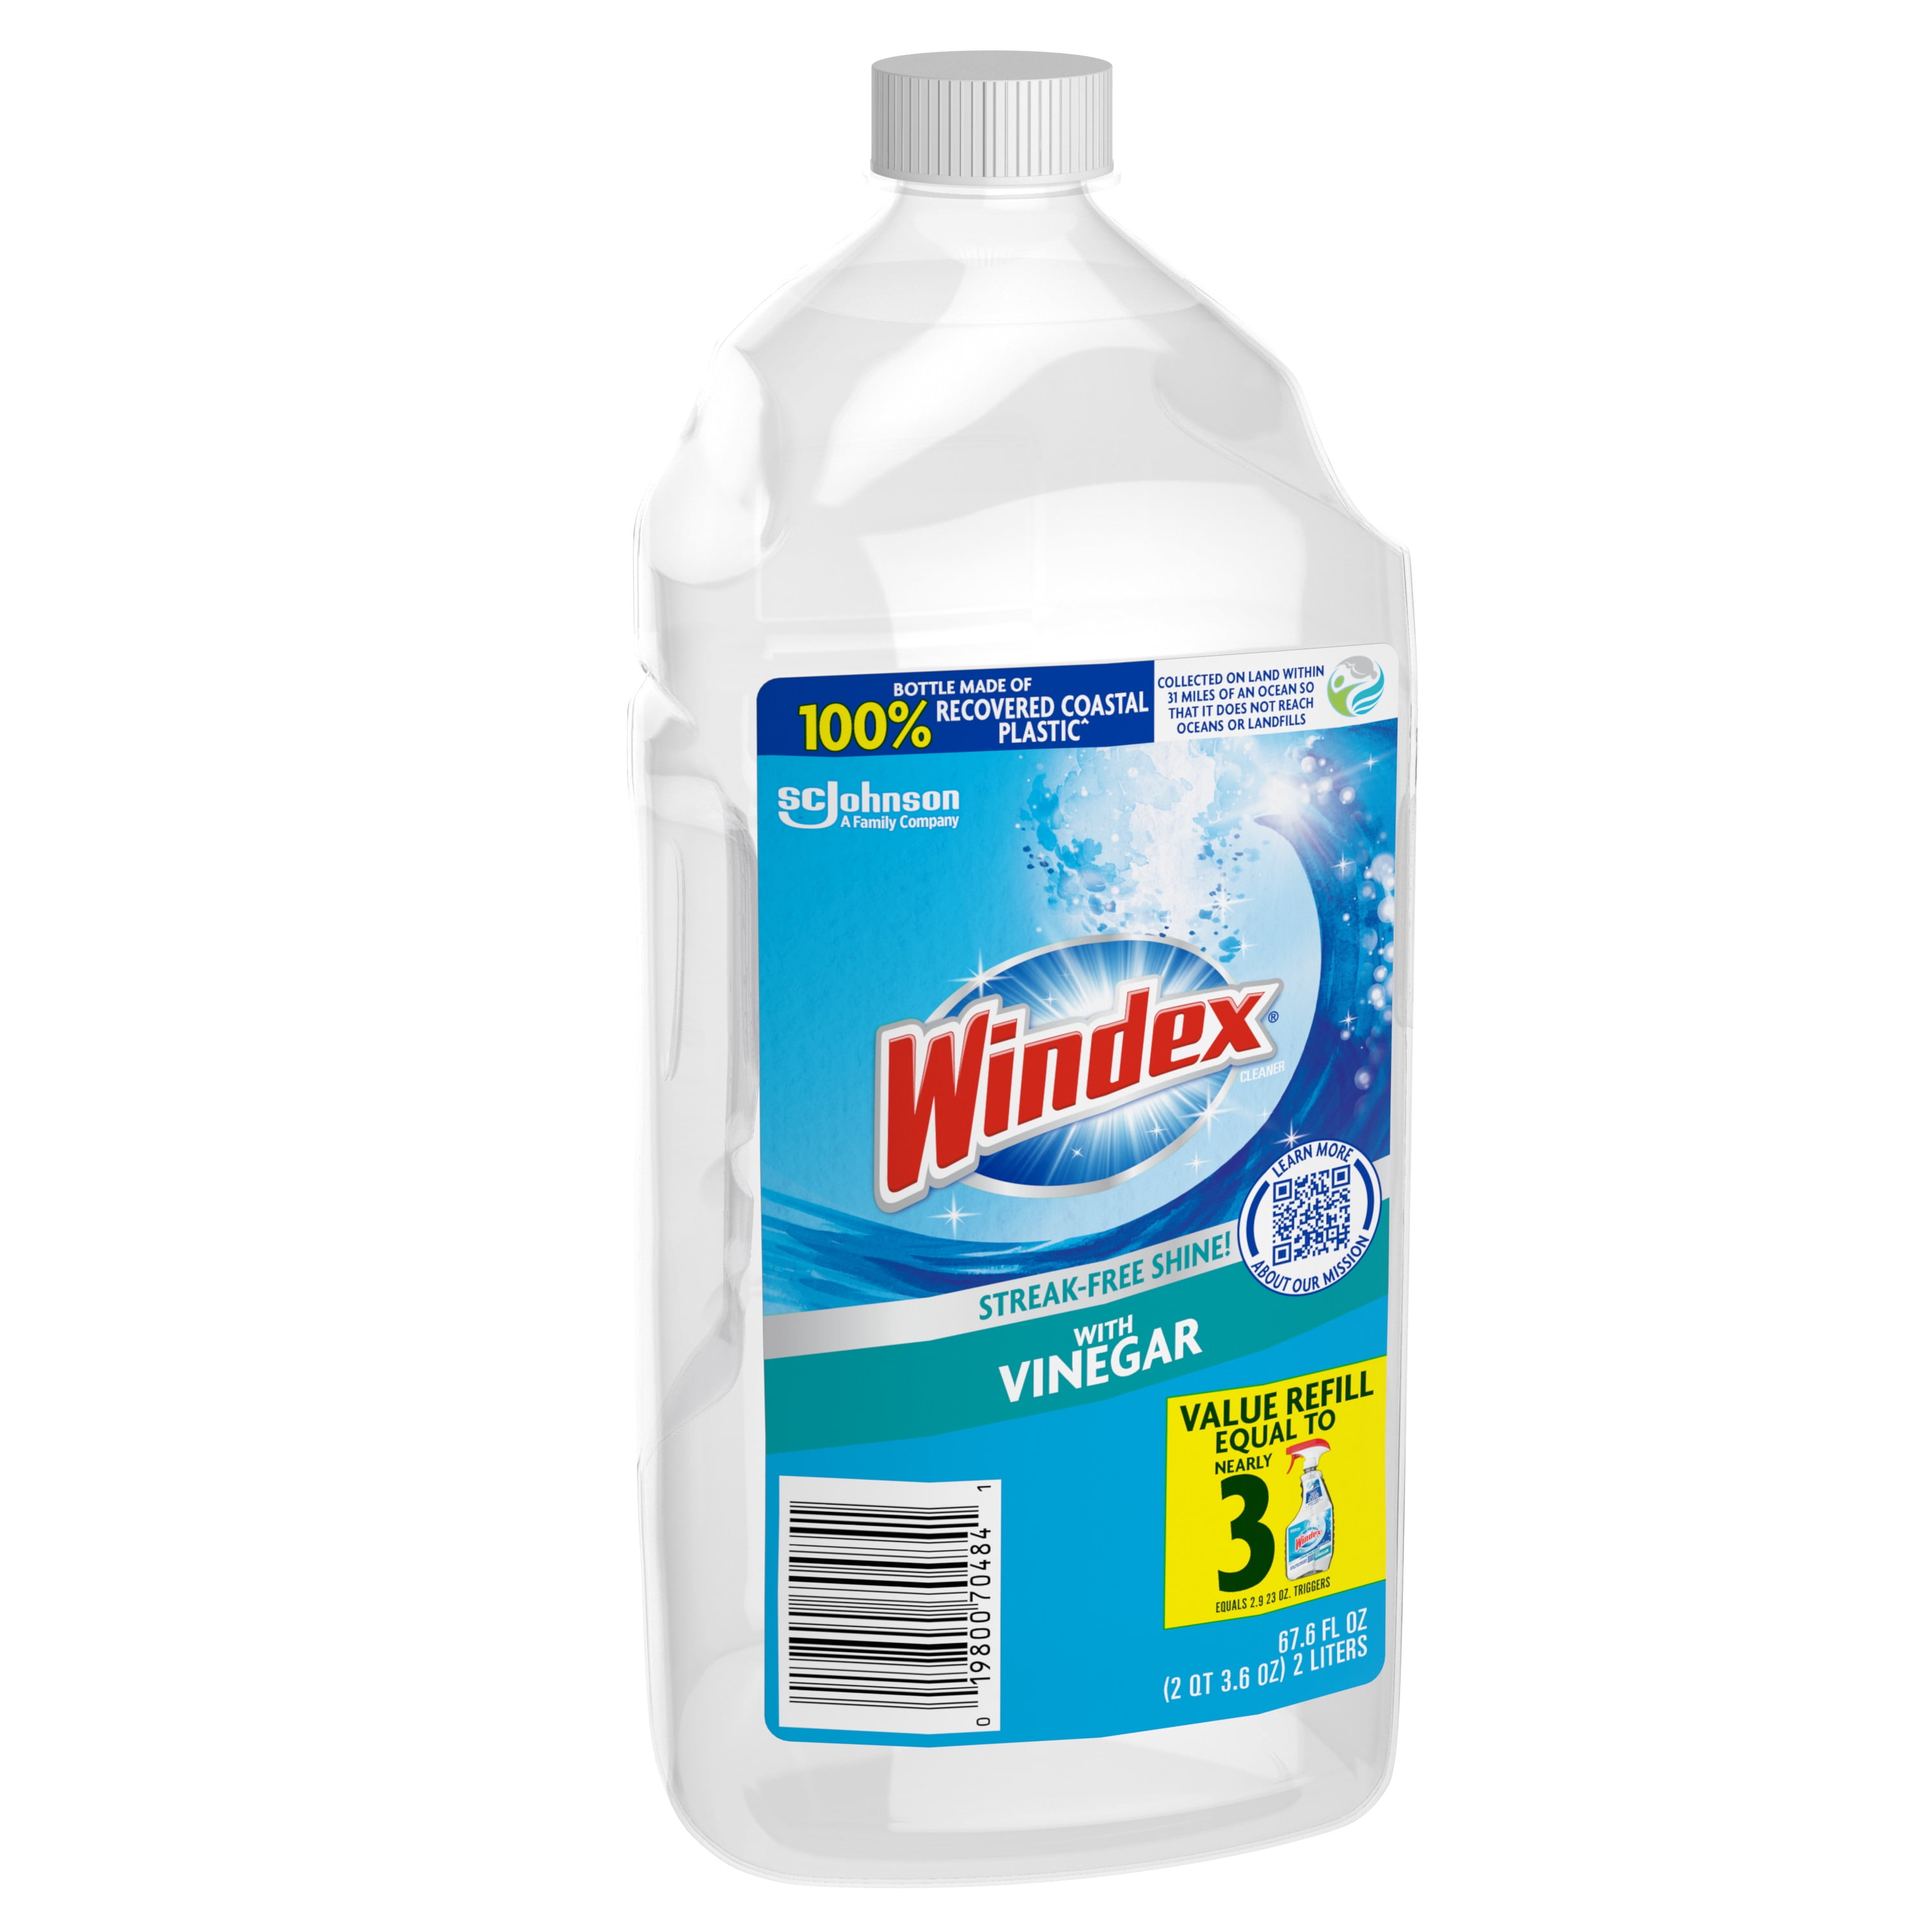 Windex 70331 26 Oz Windex Multi-Surface Cleaner With Vinegar (pk 8)